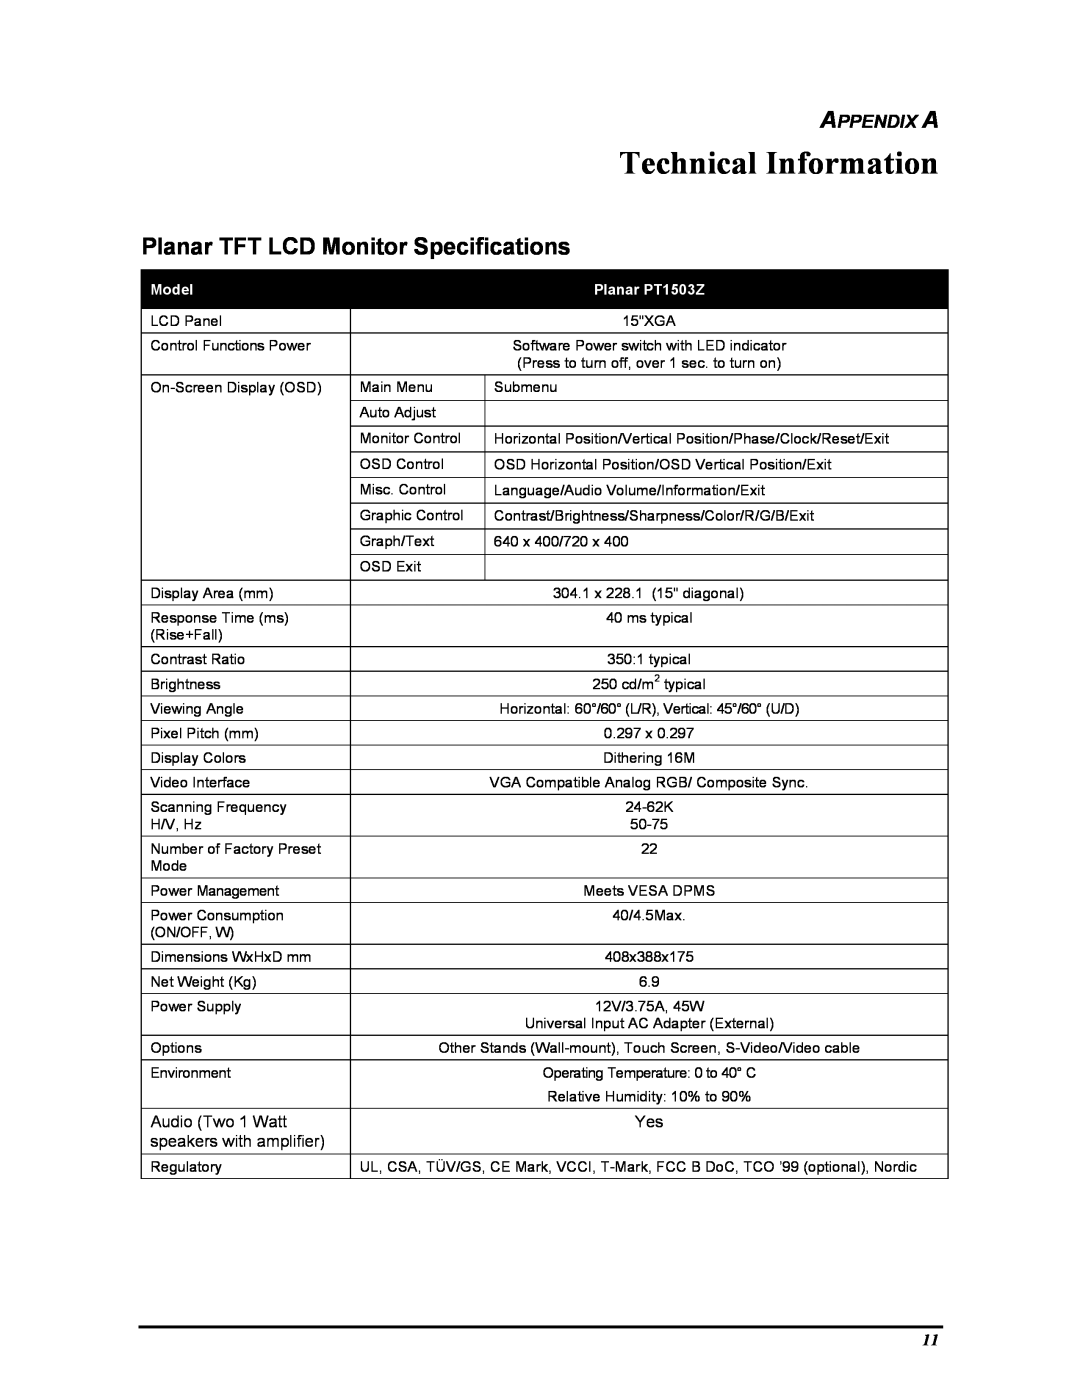 Planar manual Technical Information, Planar TFT LCD Monitor Specifications, Appendix A, Model, Planar PT1503Z 